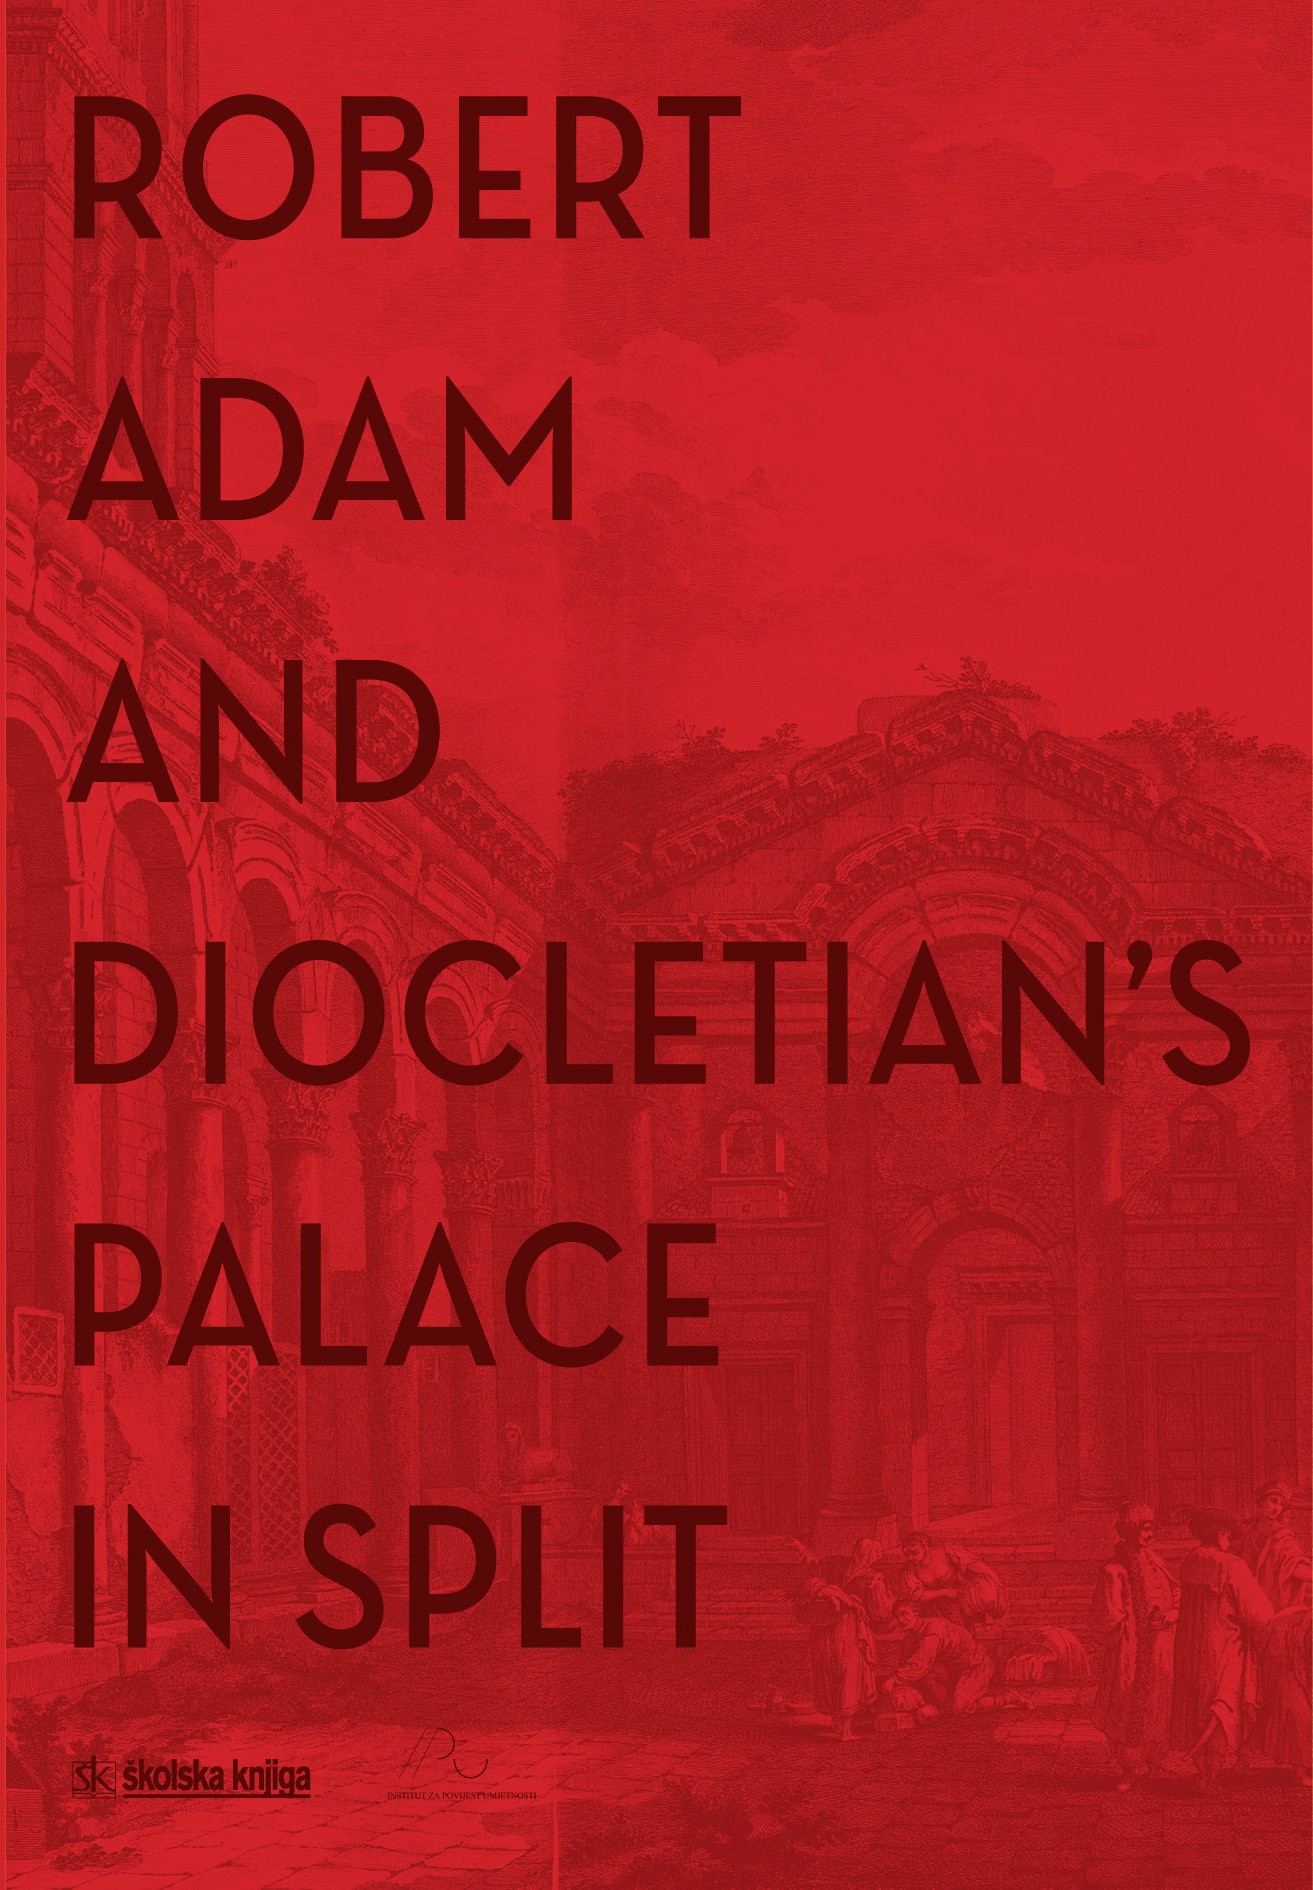 Belamarić, Joško – Ana Šverko; Robert Adam and Diocletian’s Palace in Split